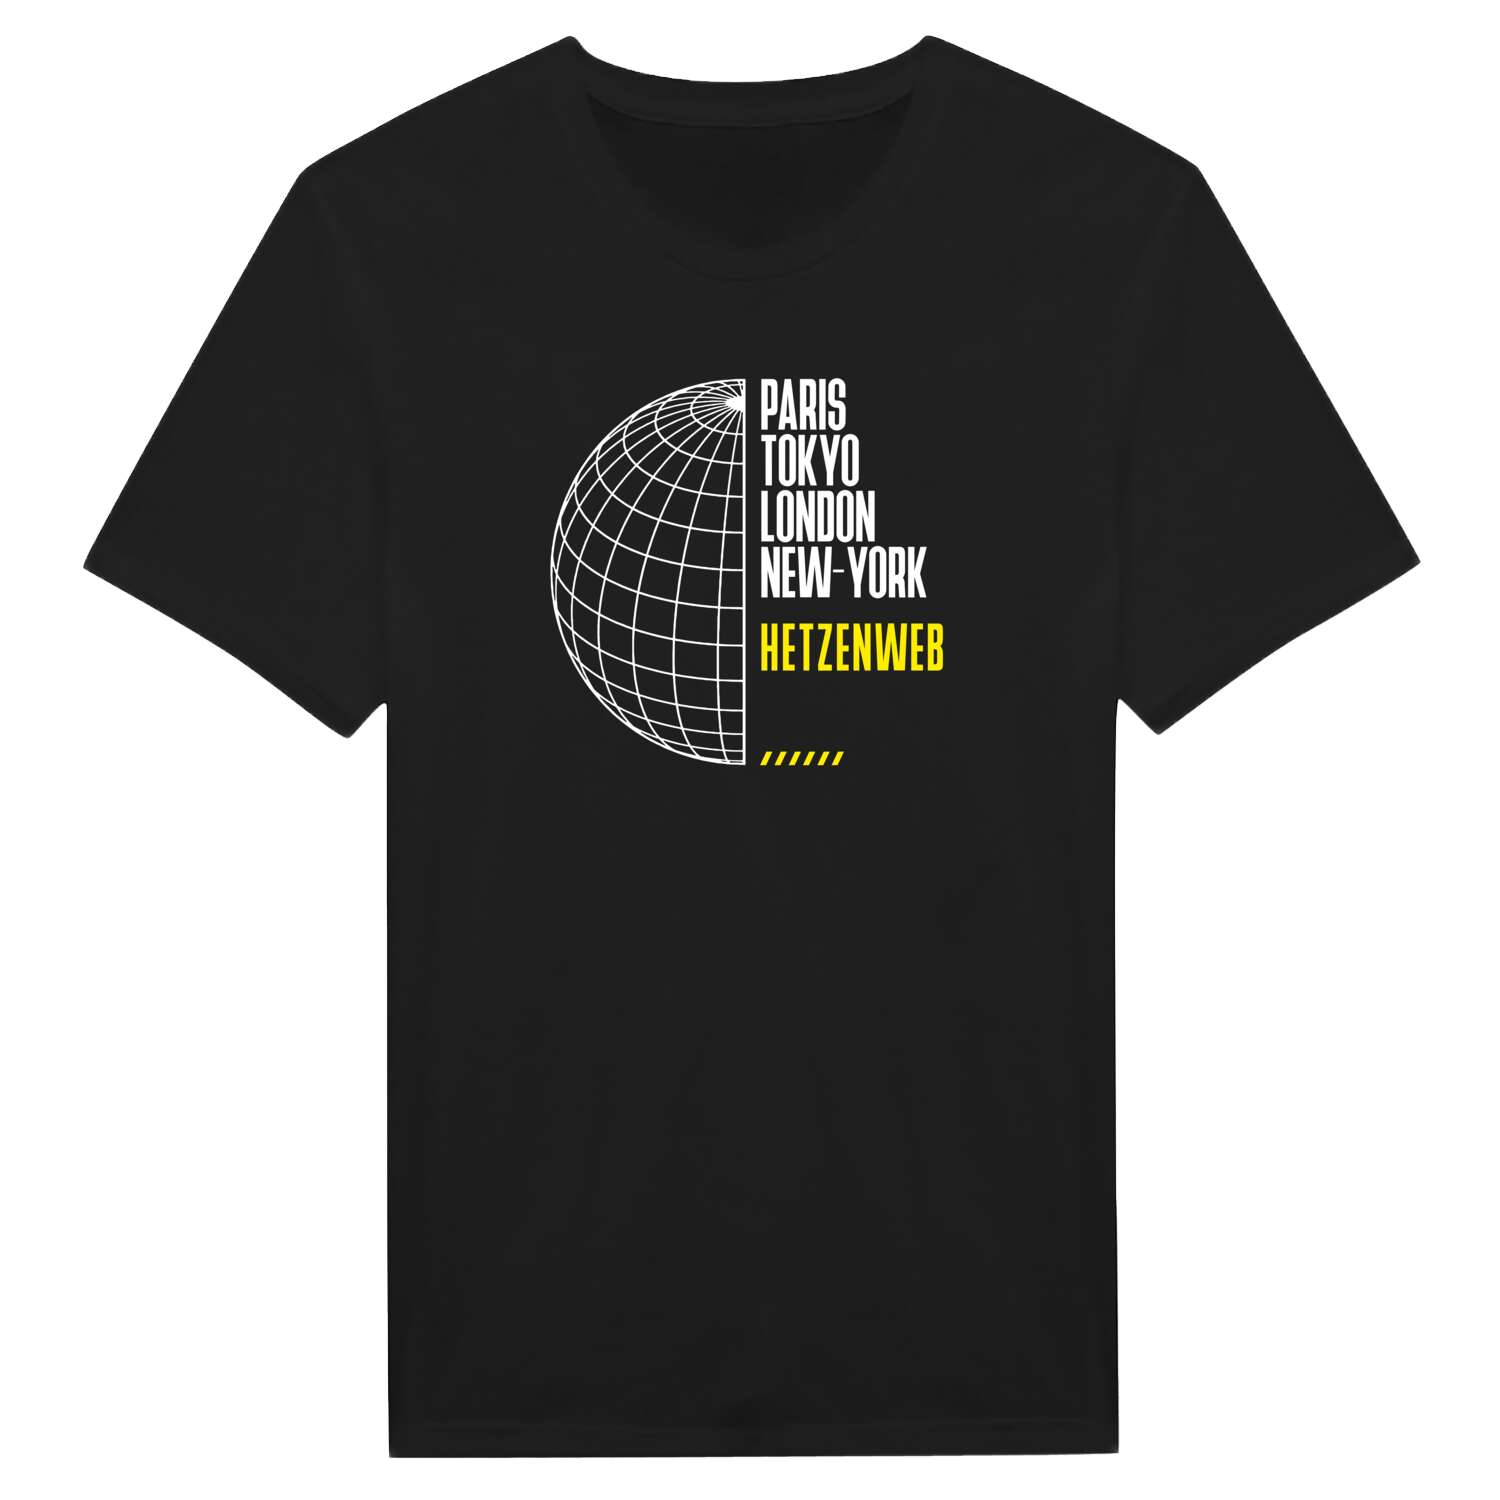 Hetzenweb T-Shirt »Paris Tokyo London«